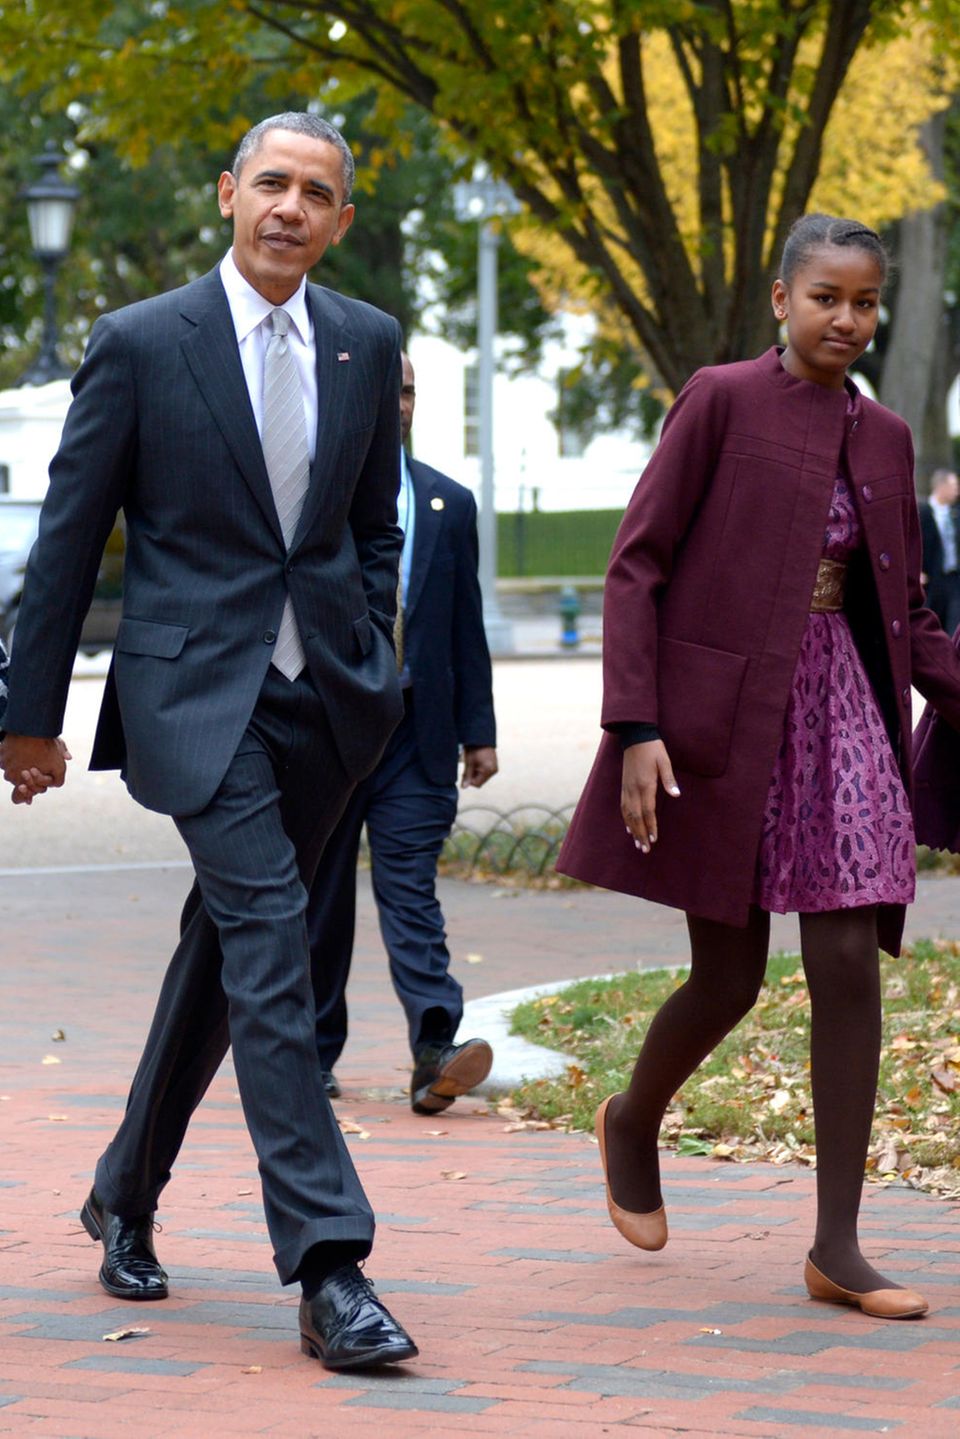 Malia + Sasha Obama: Barack Obama, Michelle Obama, Malia Obama, Sasha Obama